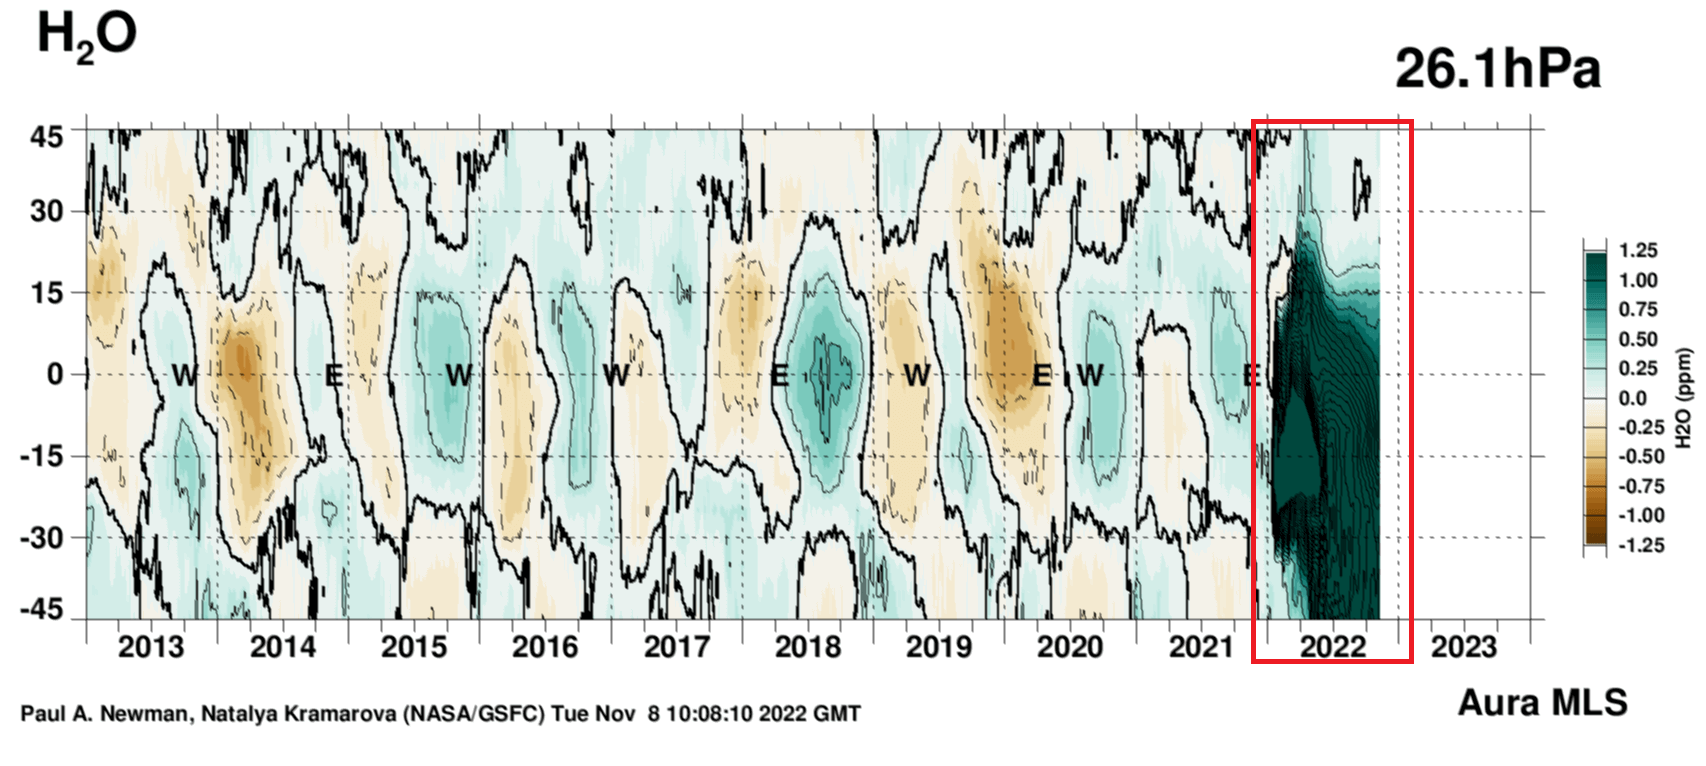 stratosphere-polar-vortex-winter-water-vapor-26mb-nasa-concentration-analysis-anomaly-2022-2023